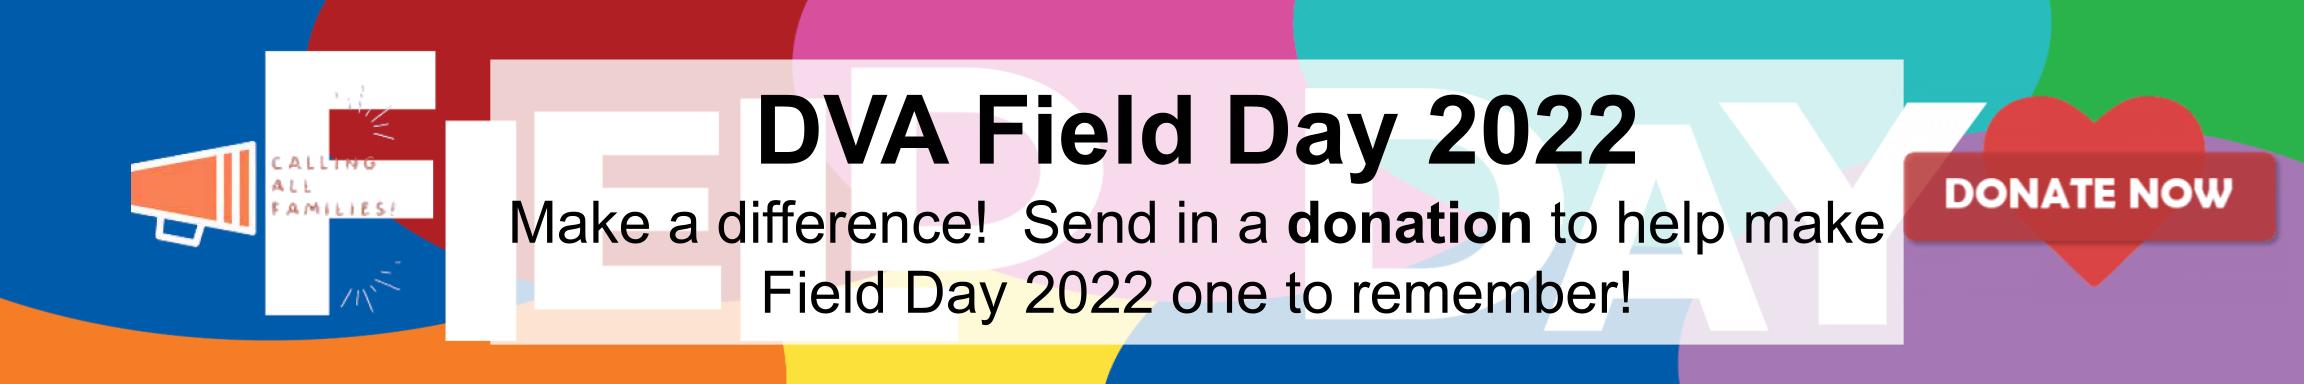 Field Day 2022 - Donate